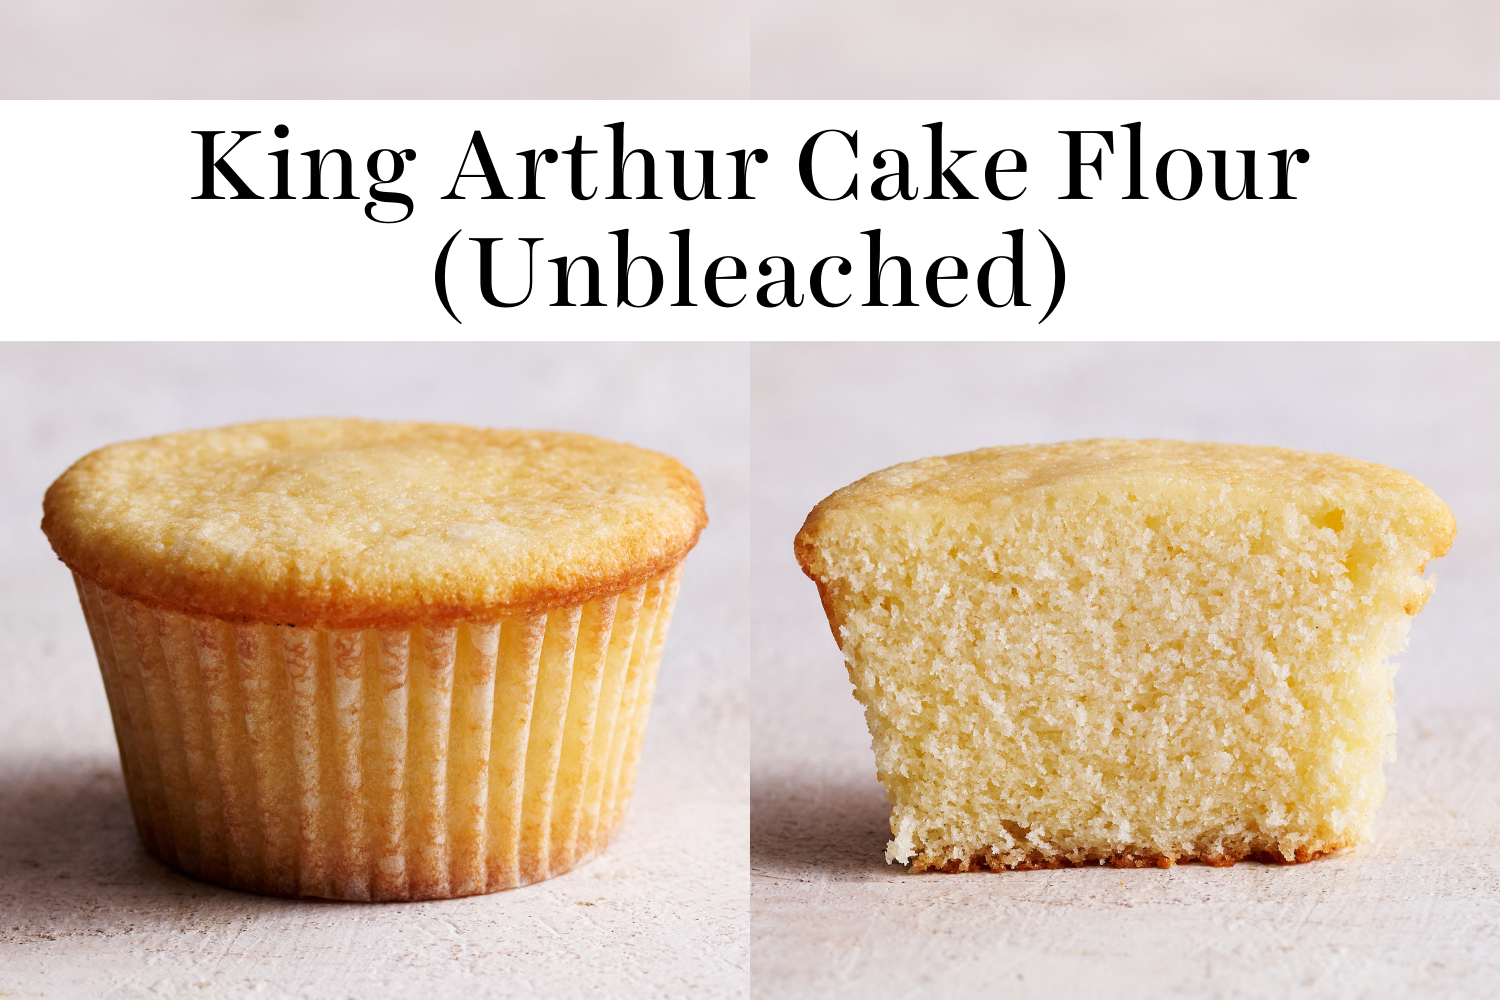 cupcakes made with King Arthur Cake Flour. 